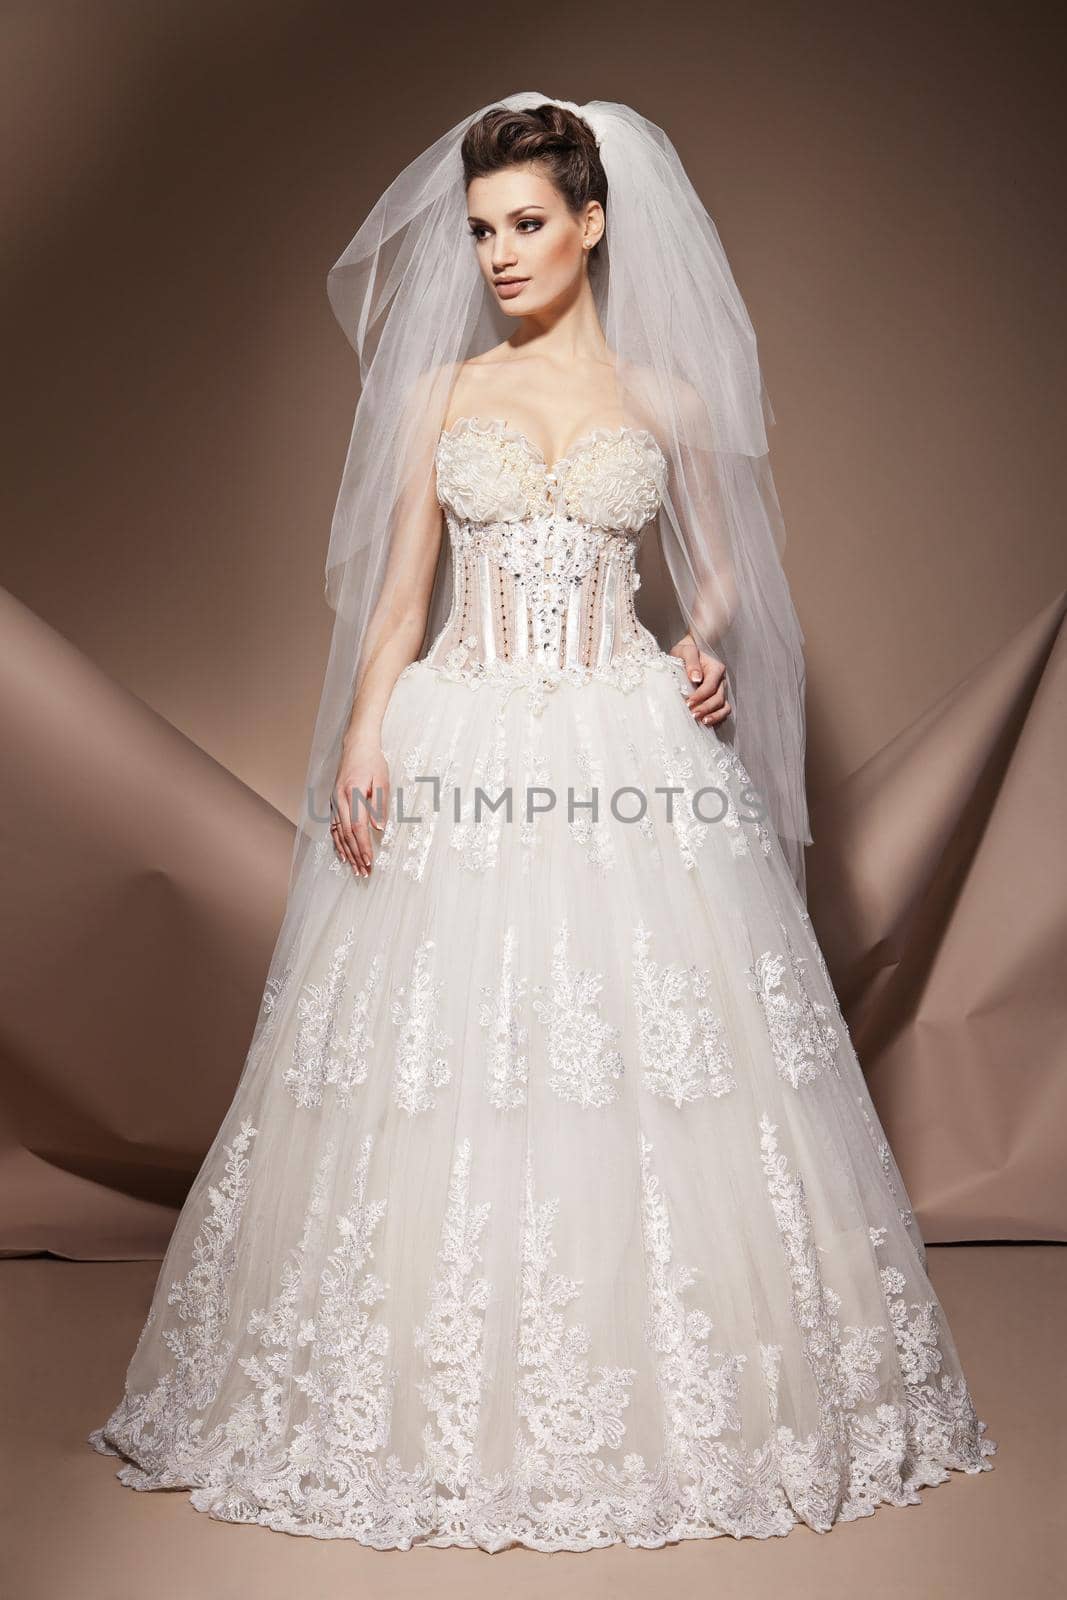 The beautiful young woman posing in a wedding dress